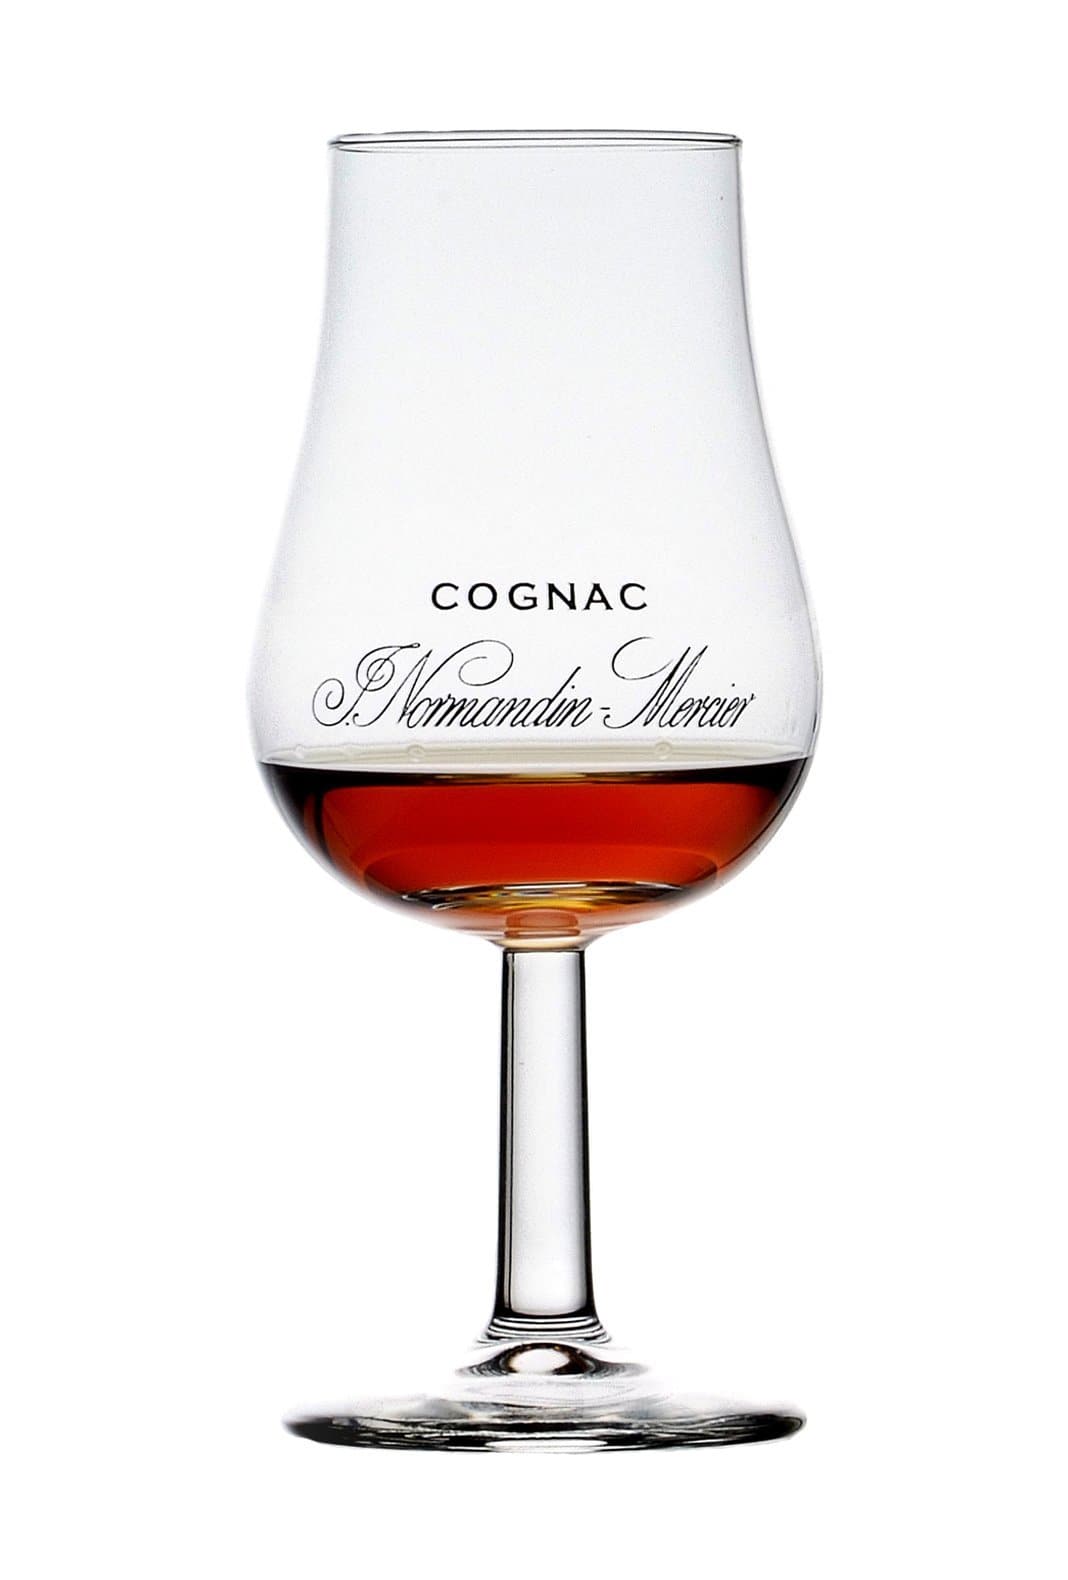 Normandin-Mercier Cognac Glass (Tulip Shape) | Stemware | Shop online at Spirits of France